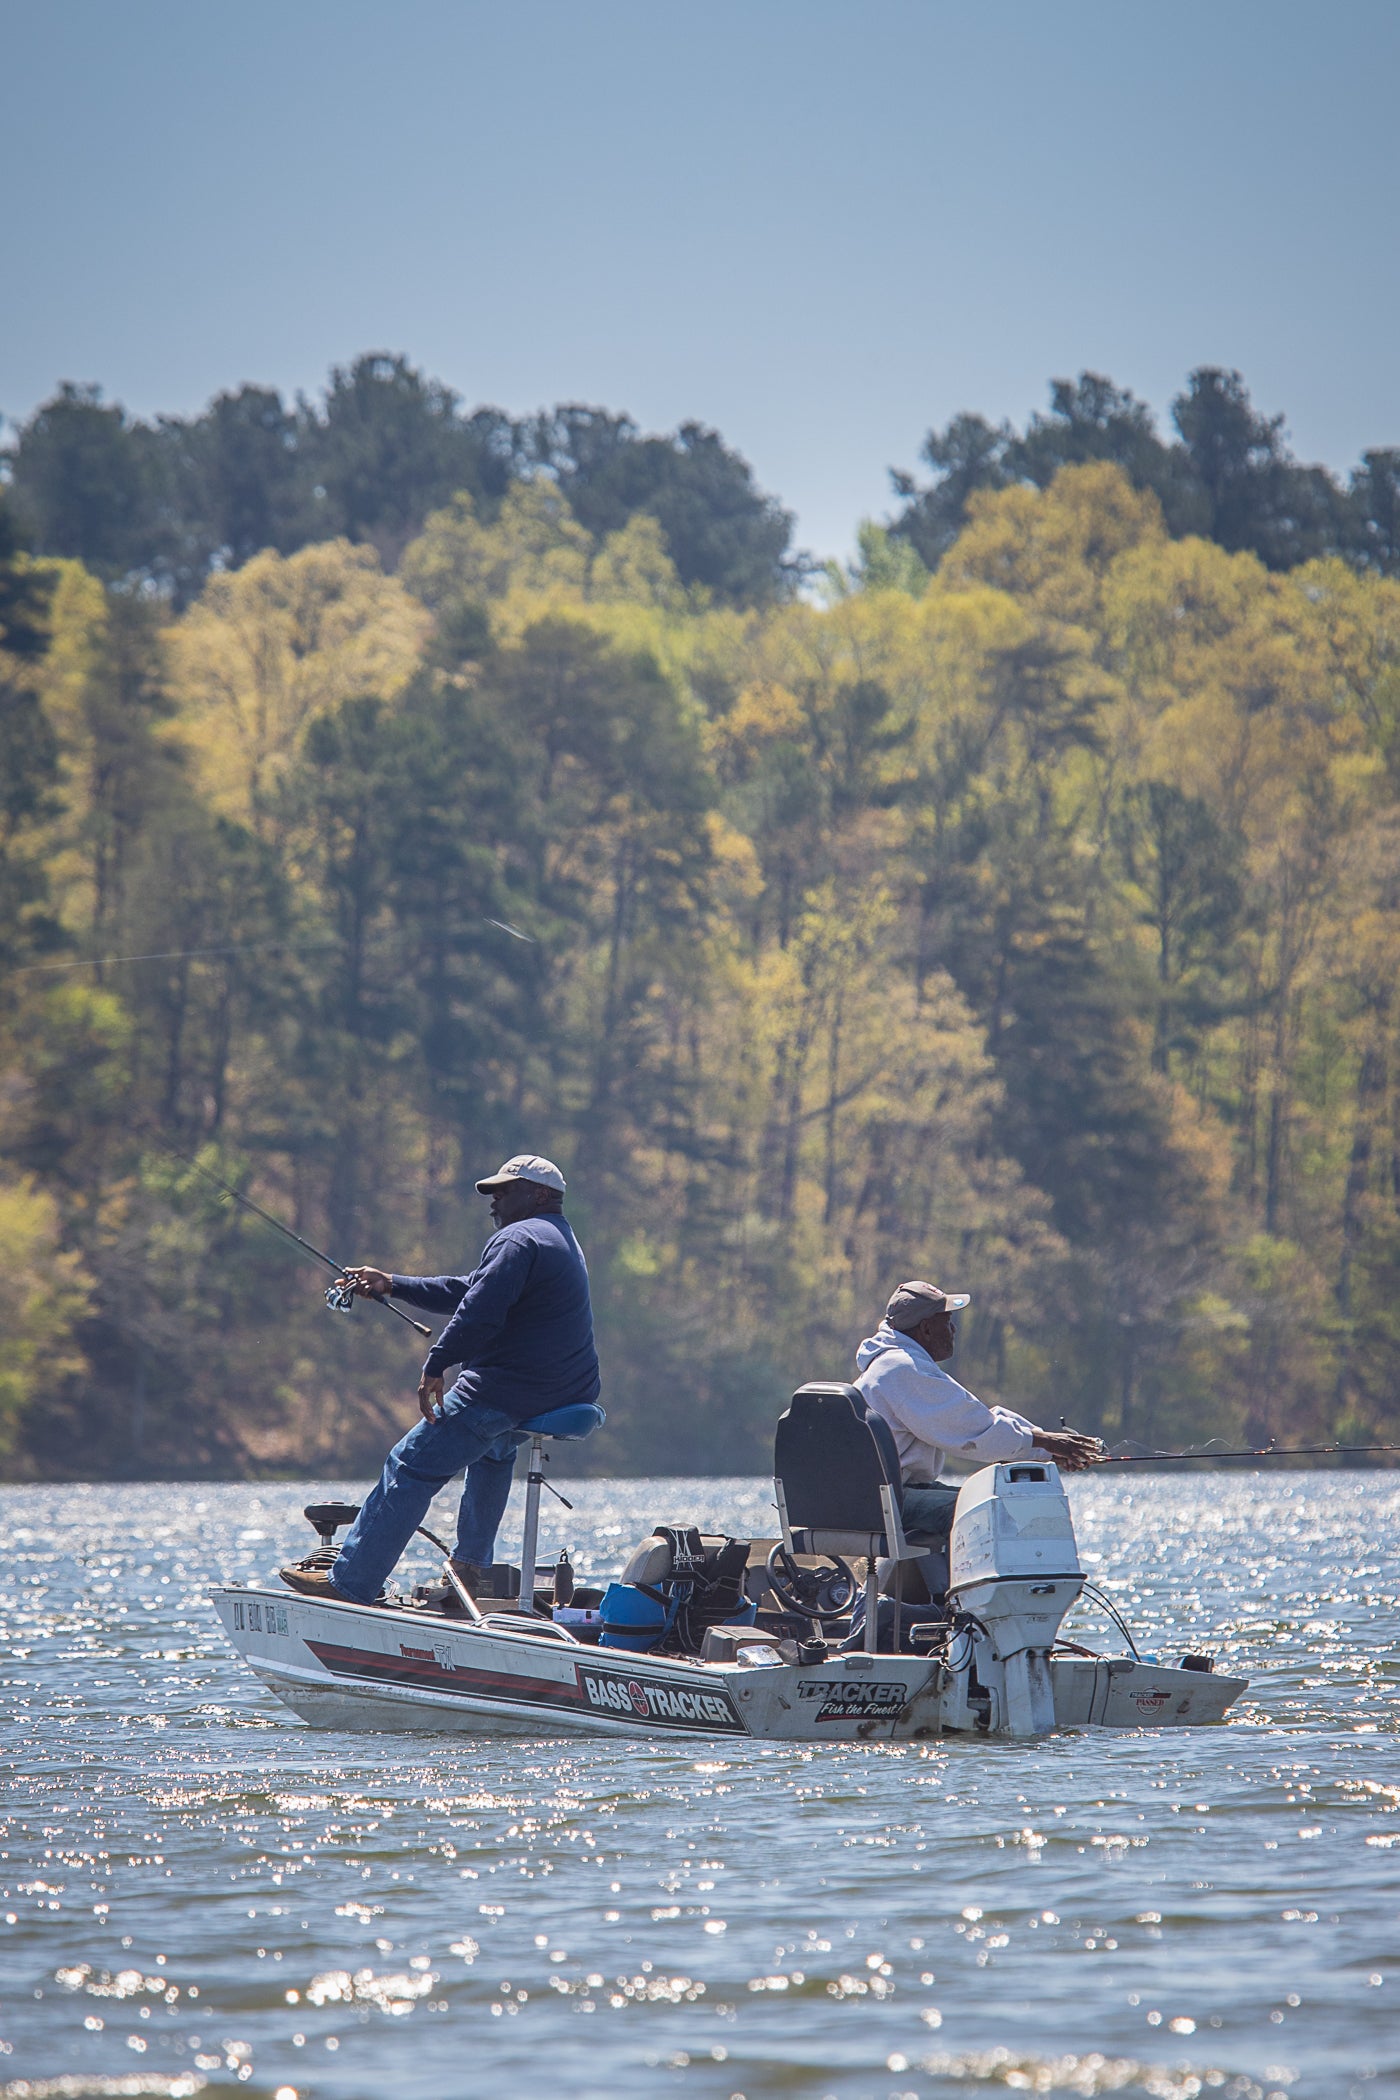 Walker County Public Fishing Lake Reopens February 15